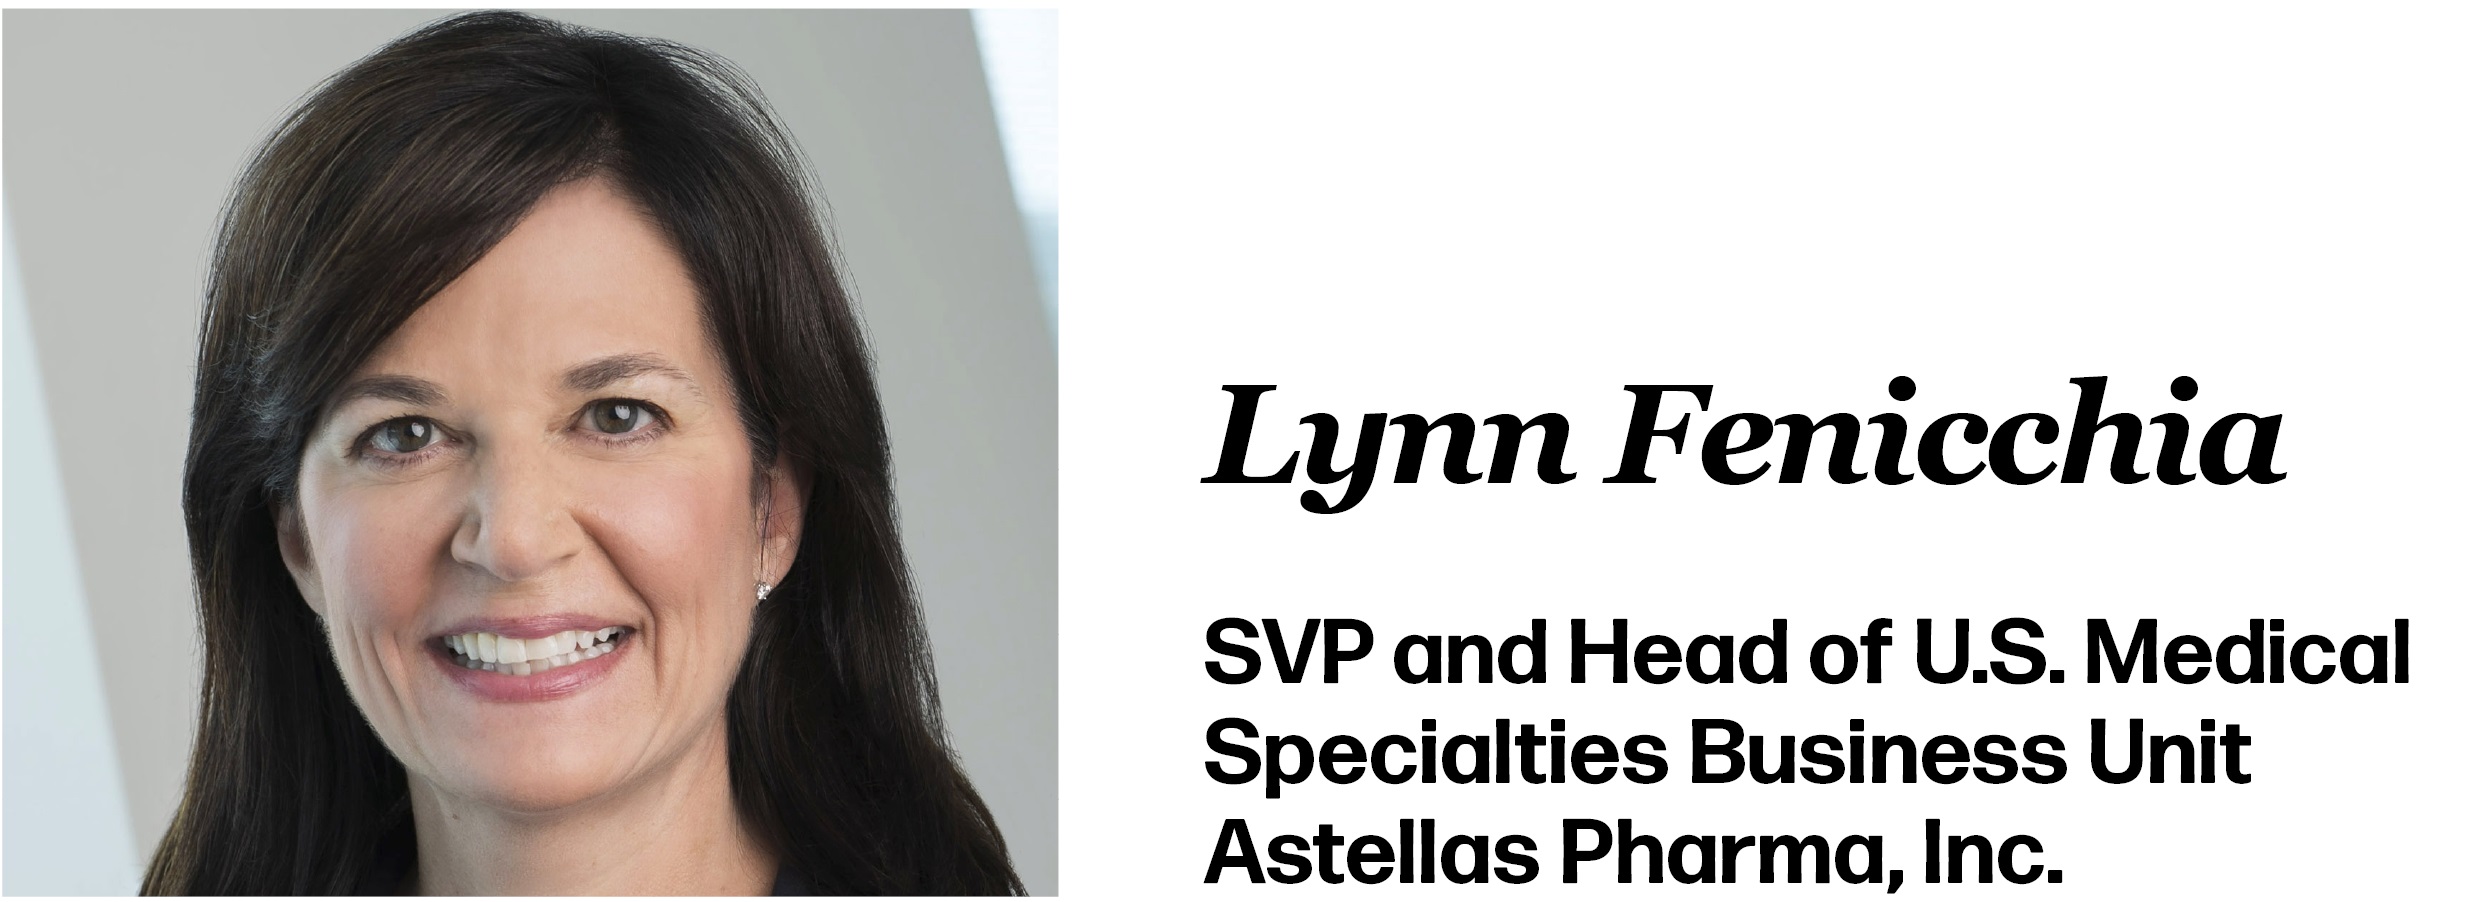 Lynn Fenicchia SVP and Head of U.S. Medical Specialties Business Unit Astellas Pharma, Inc.